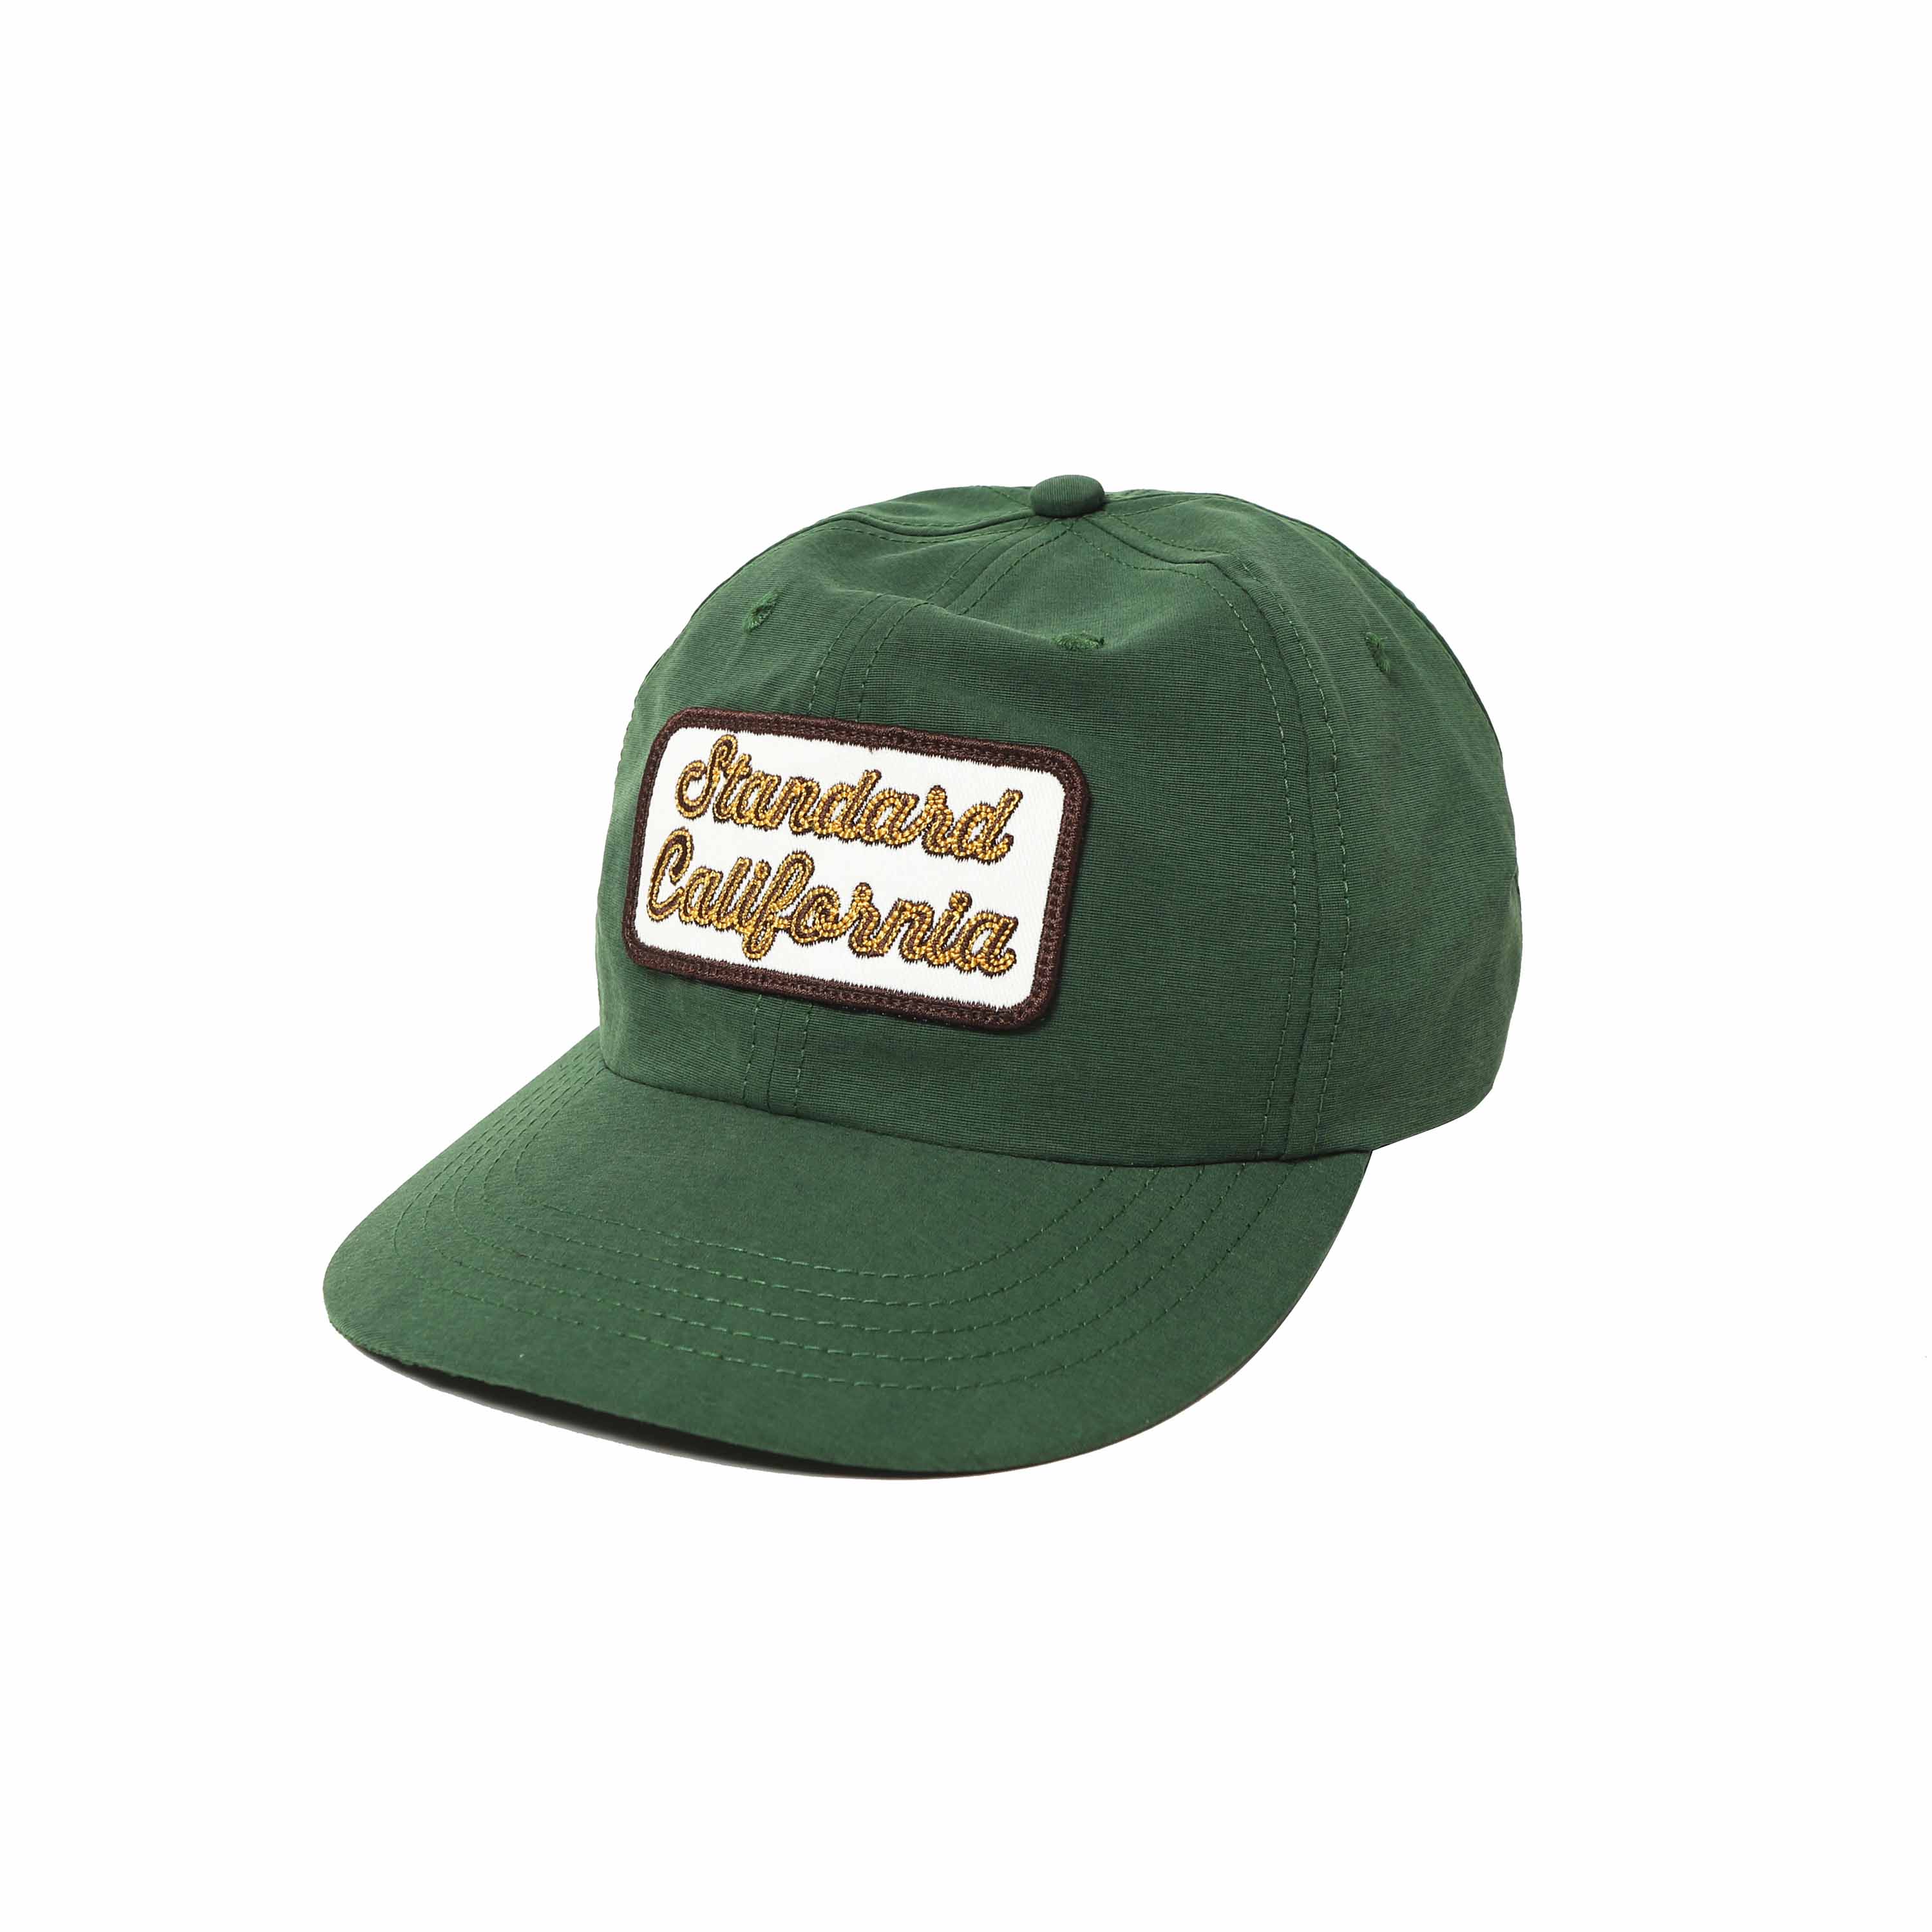 LOGO PATCH 60/40 CLOTH CAP - GREEN